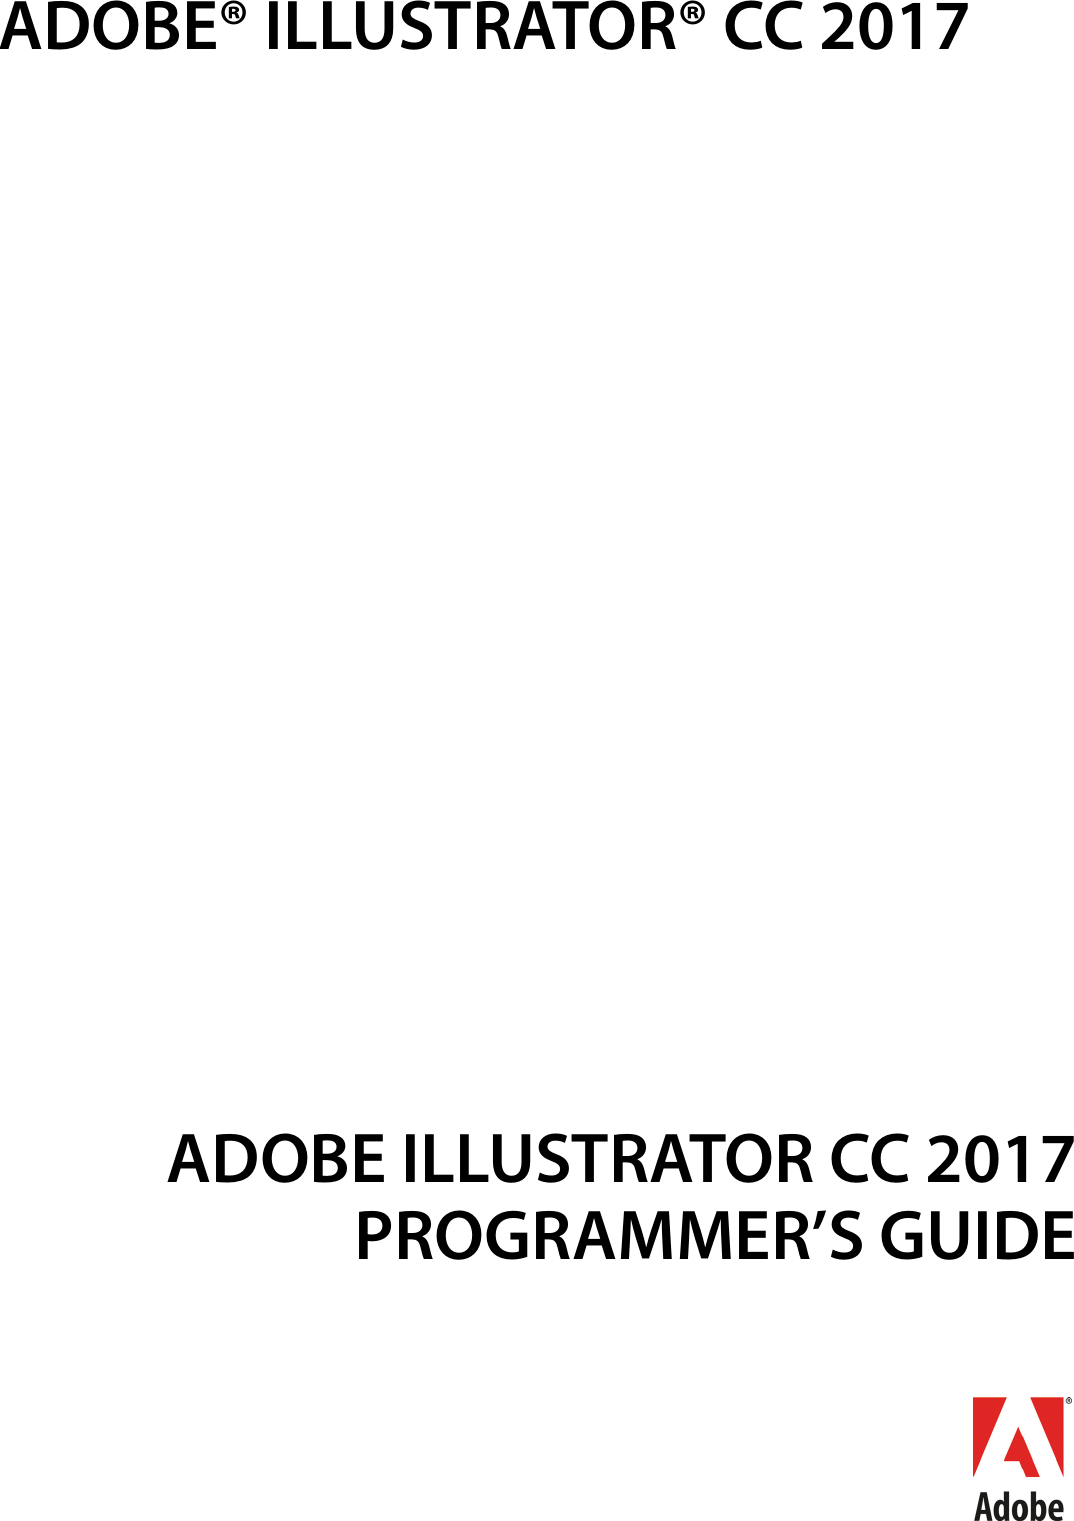 adobe illustrator user guide pdf free download